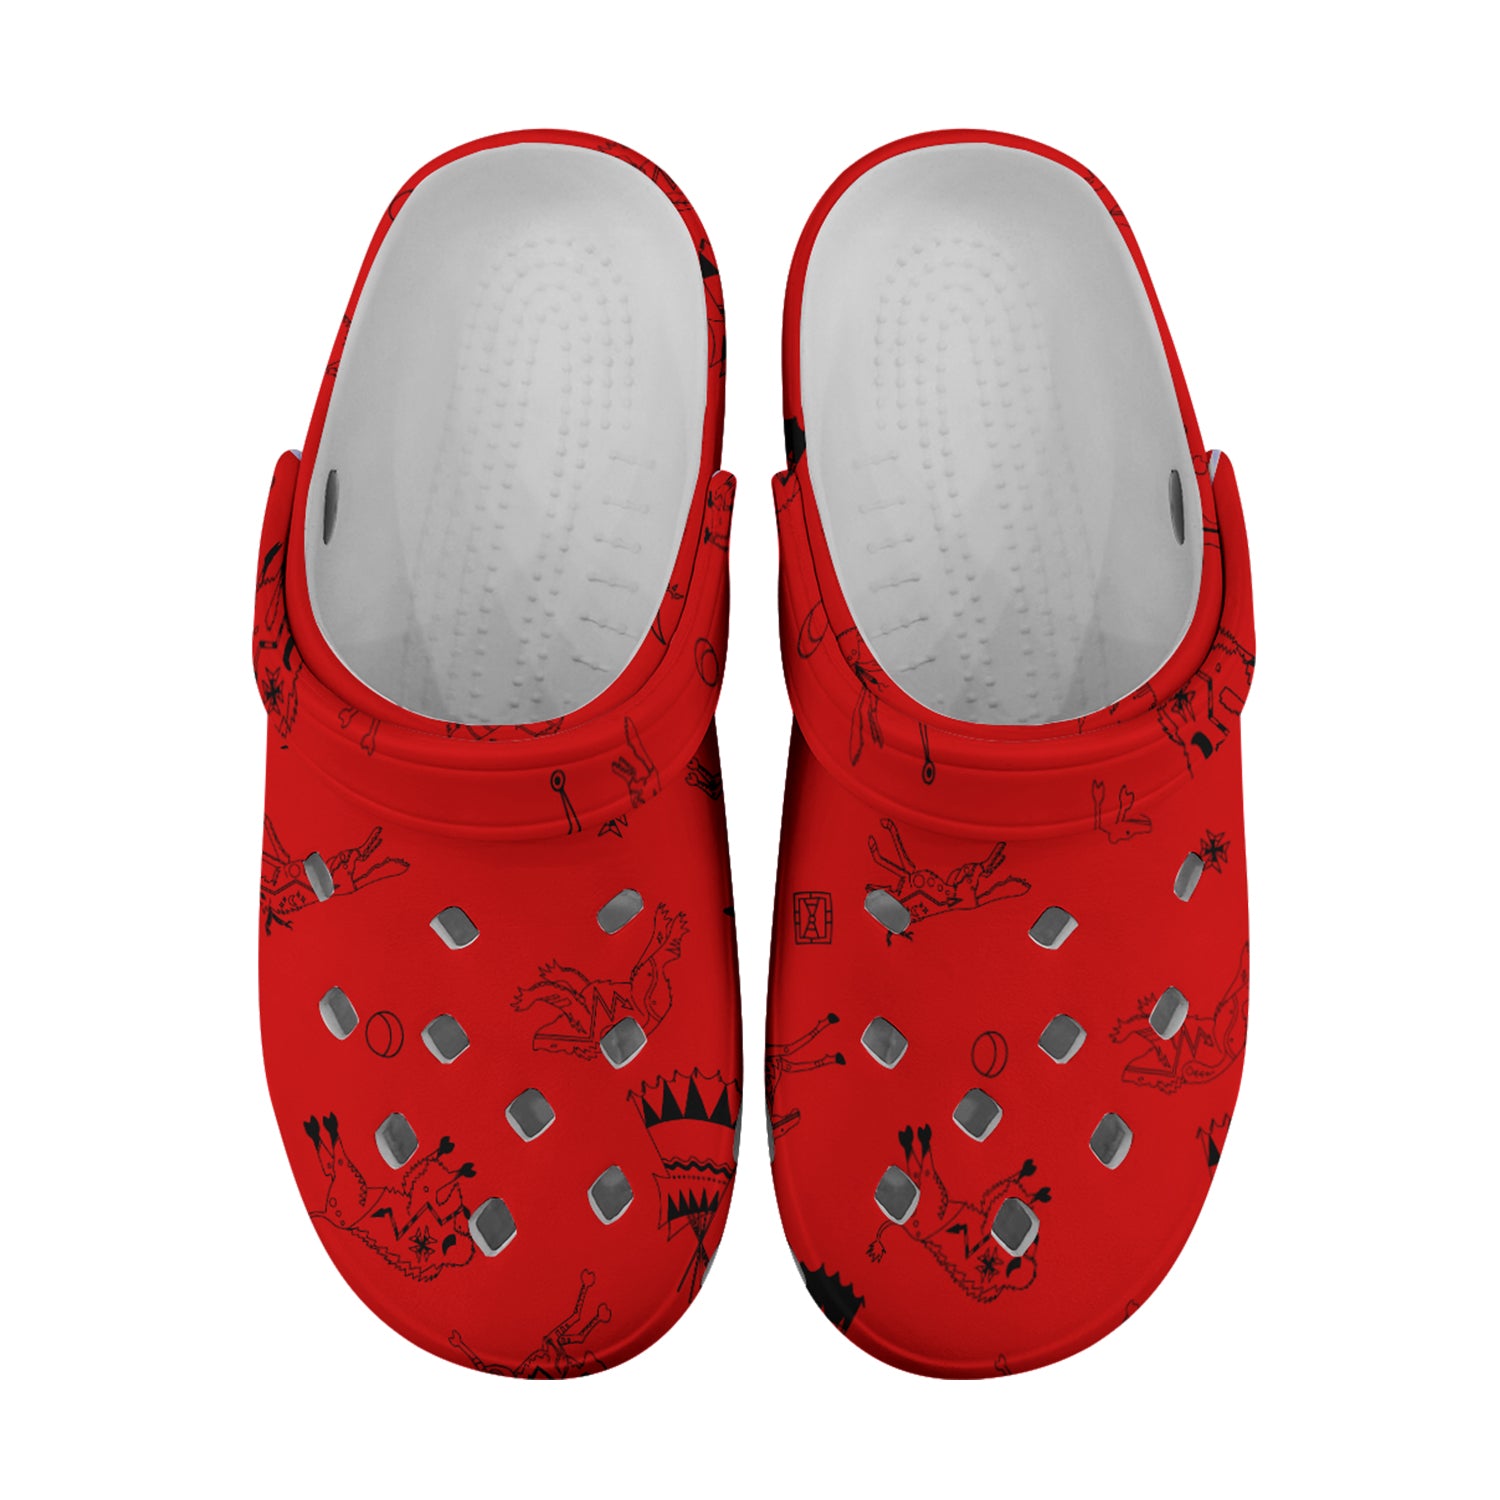 Ledger Dabbles Red Muddies Unisex Clog Shoes